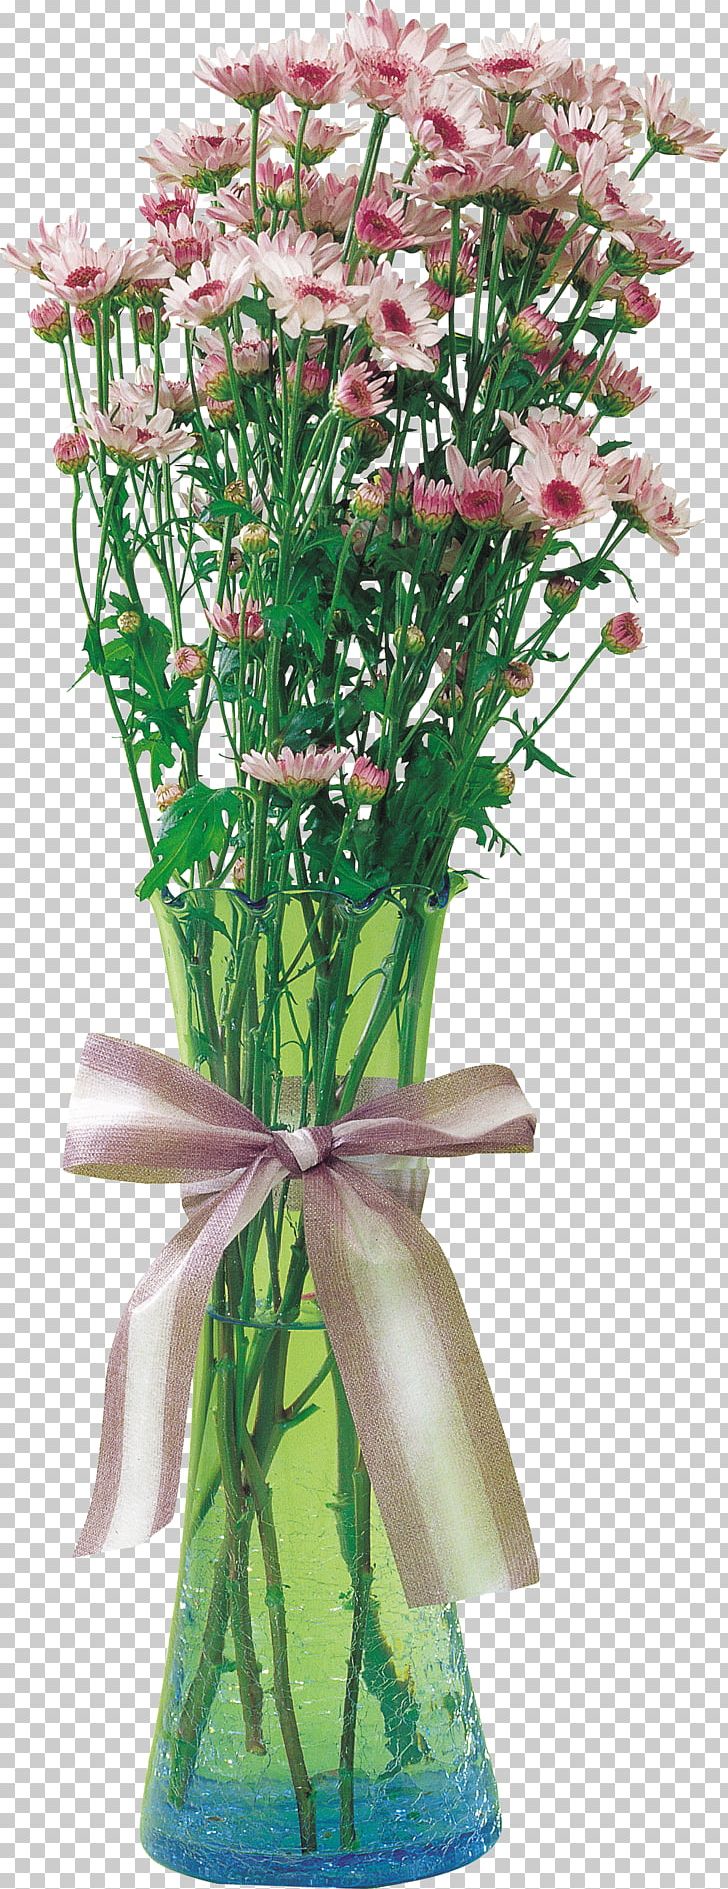 Flowerpot Vase Cut Flowers Flower Bouquet PNG, Clipart, Artificial Flower, Chrysanthemum, Collage, Cut Flowers, Floral Design Free PNG Download